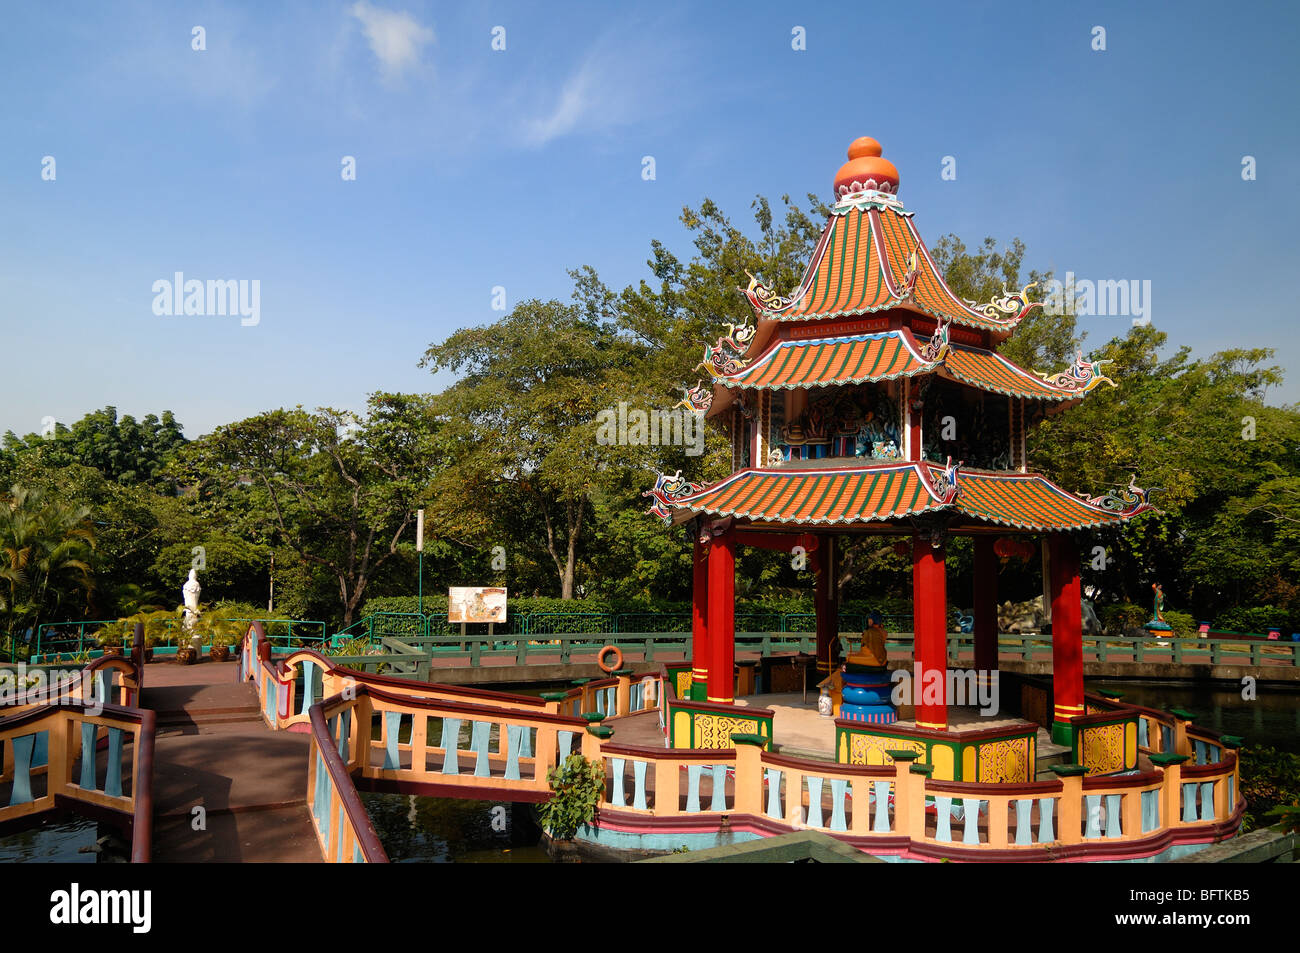 Hauptpagode, Fischteich & Brücke, Gartenkiosk oder Pavillon, Tiger Balm Gardens Chinese Theme Park und Public Garden Singapore Stockfoto